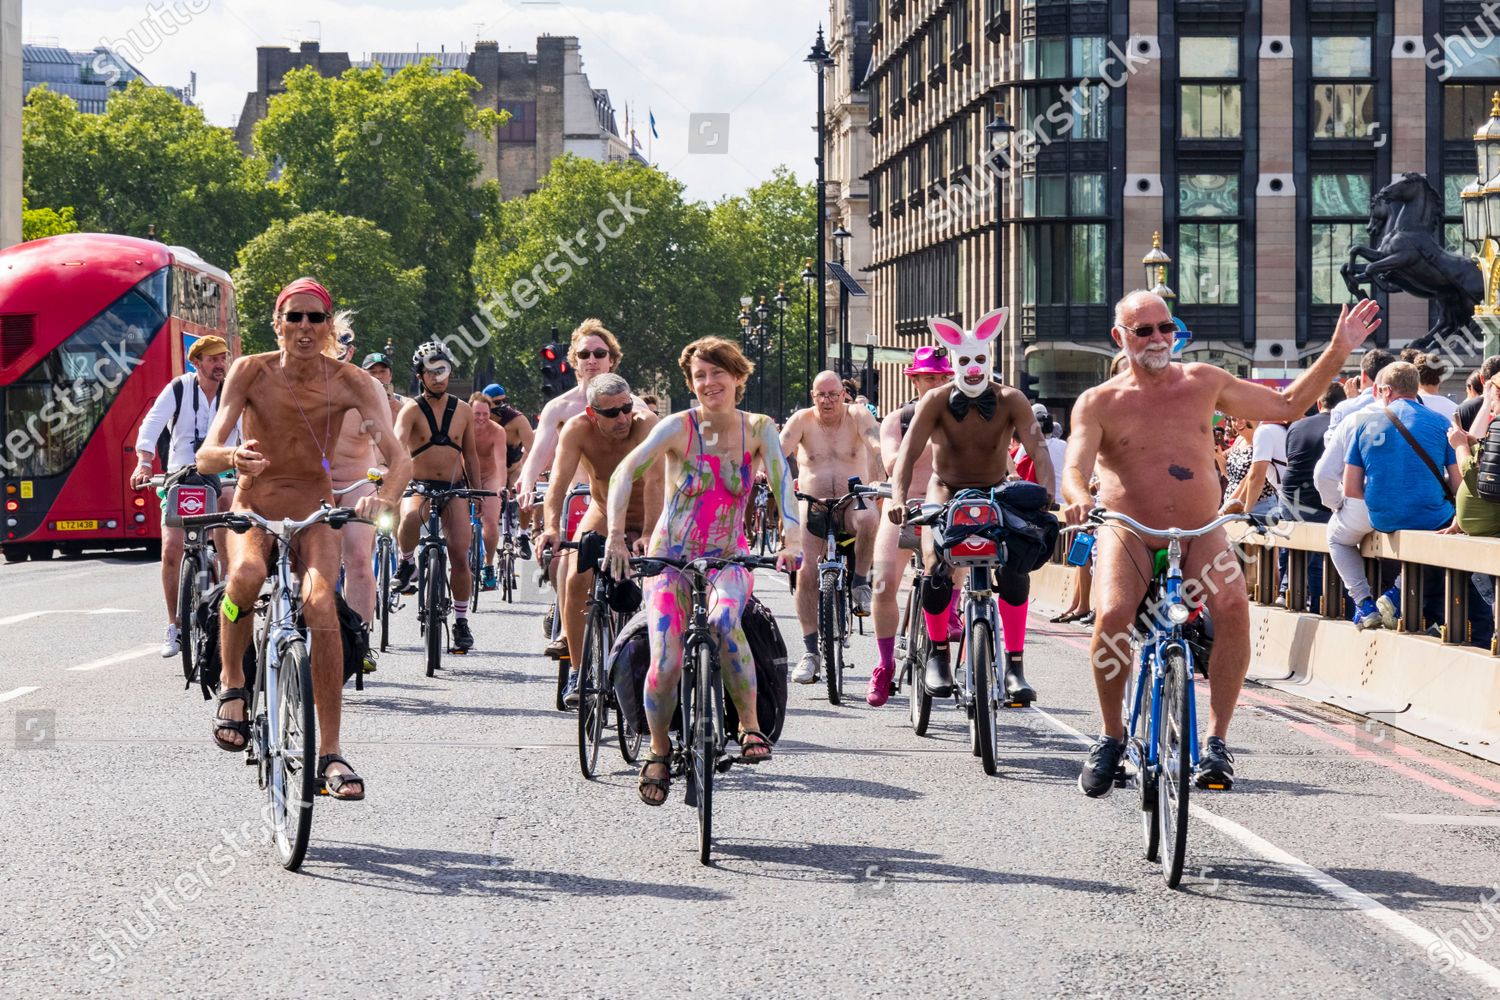 London naked bike ride asian